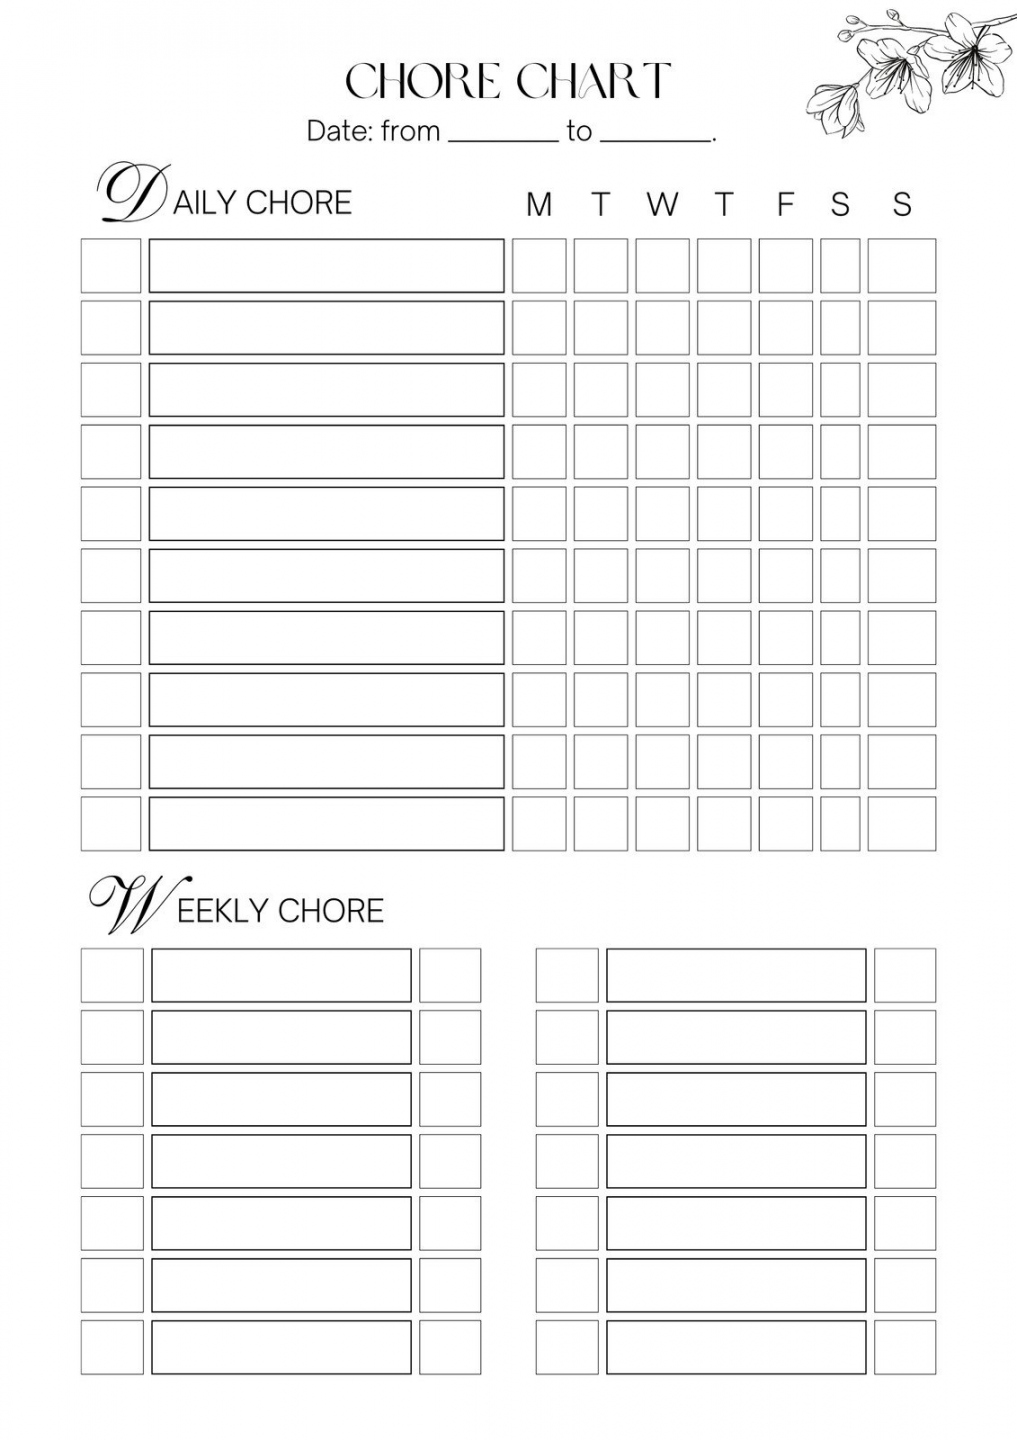 Free Chore Chart Printable - Printable - Free customizable chore chart templates to print  Canva